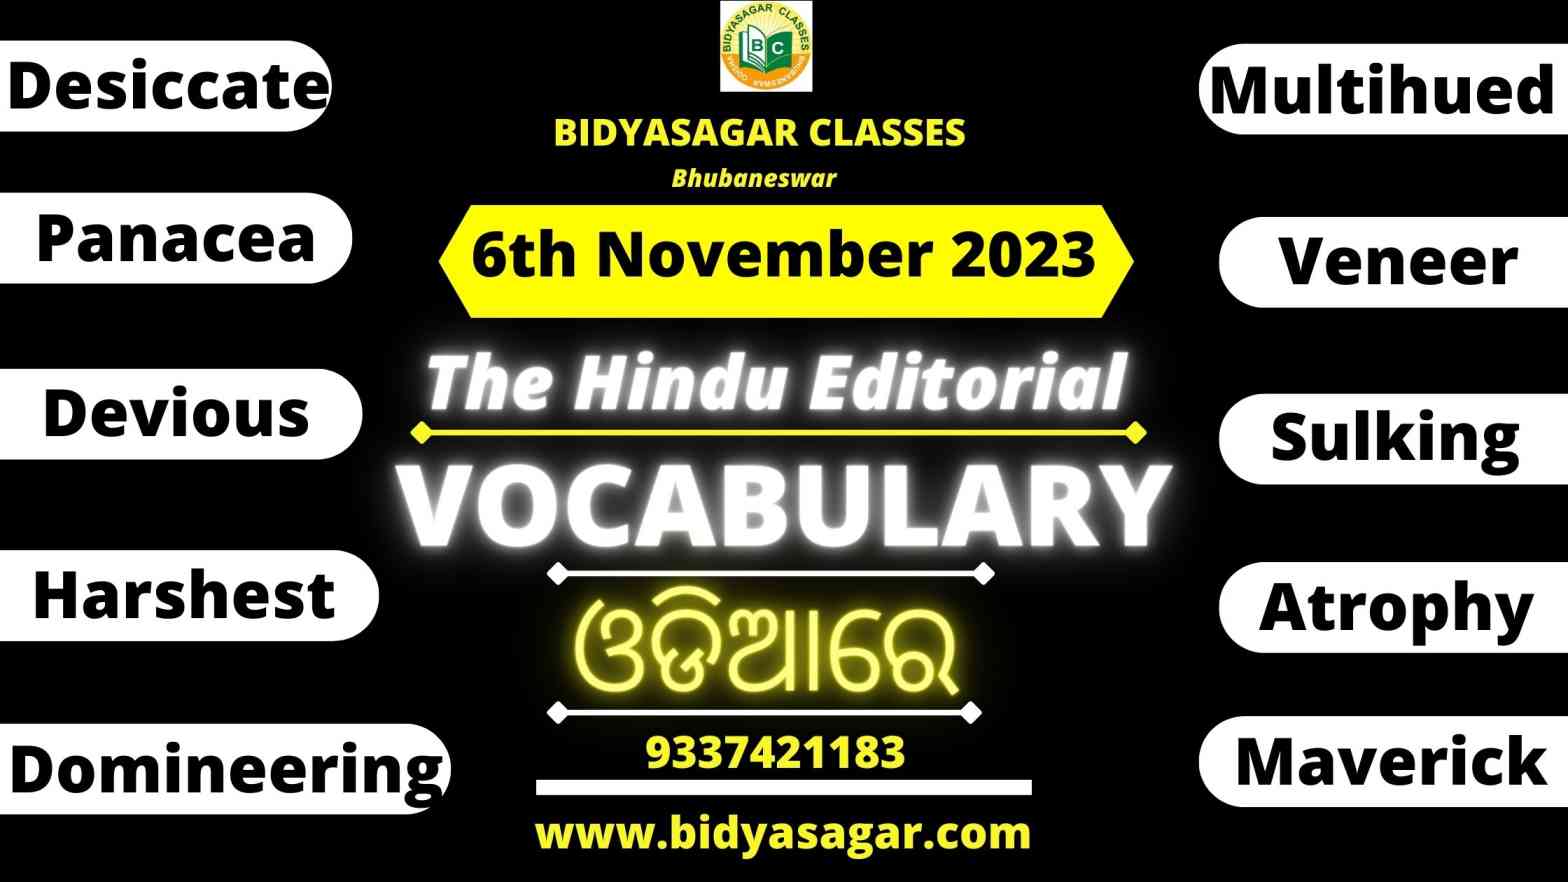 The Hindu Editorial Vocabulary of 6th November 2023